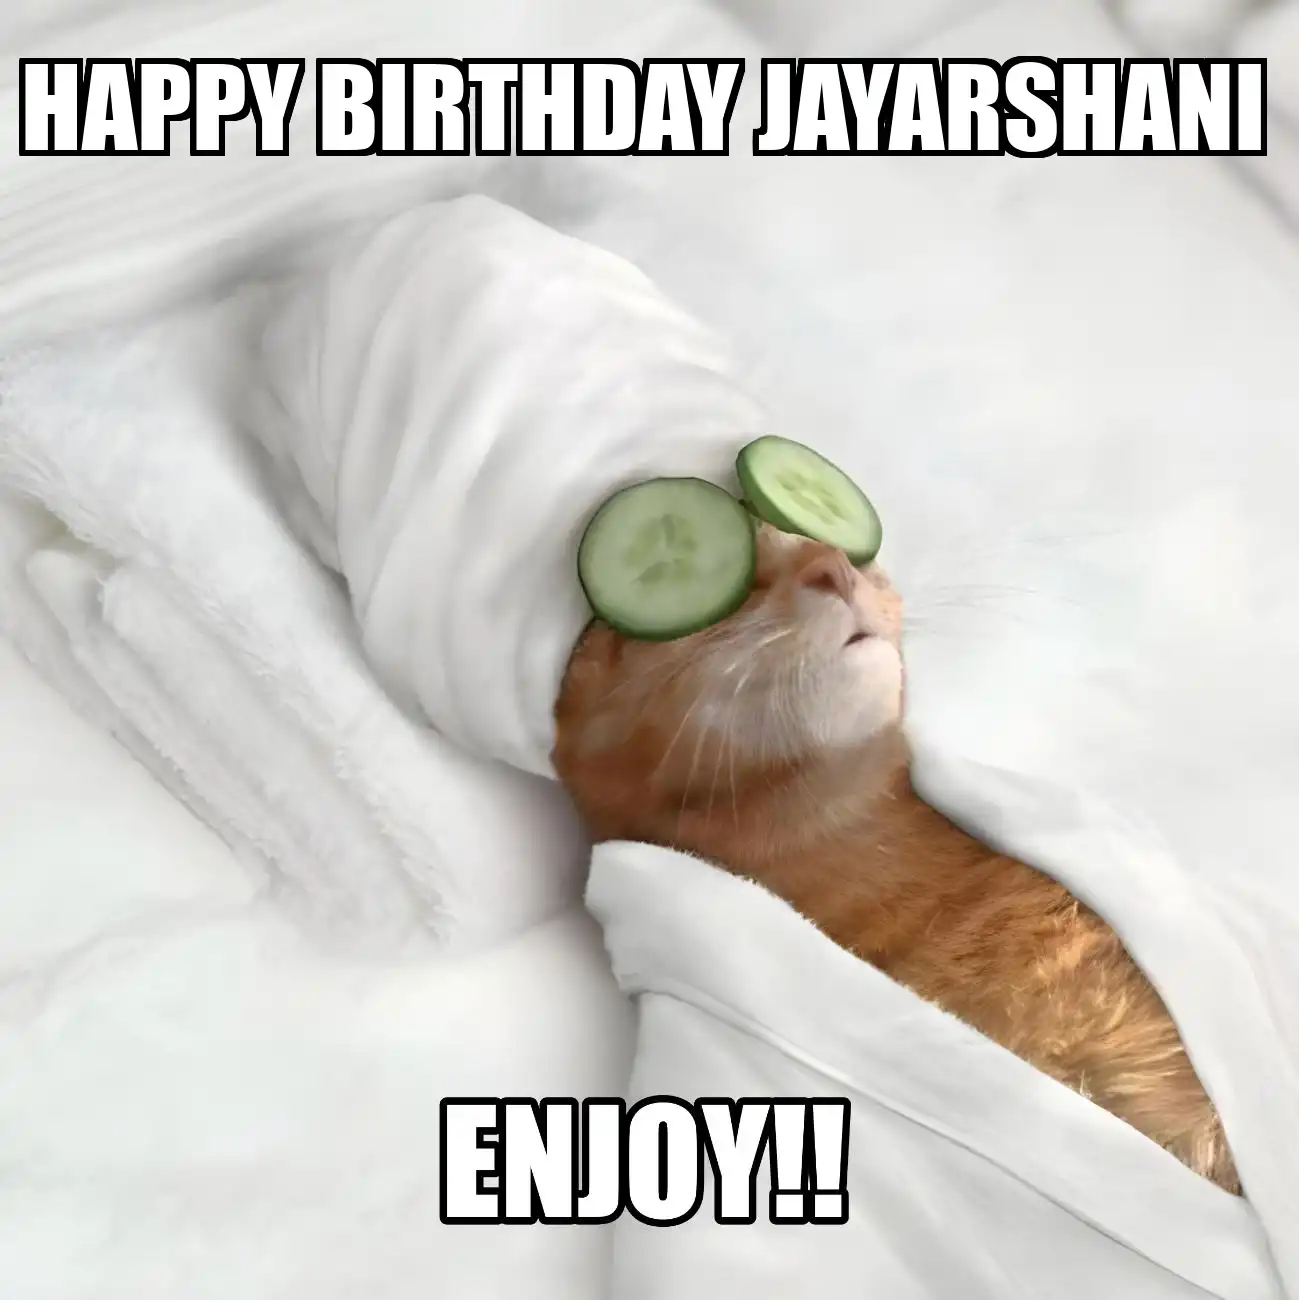 Happy Birthday Jayarshani Enjoy Cat Meme